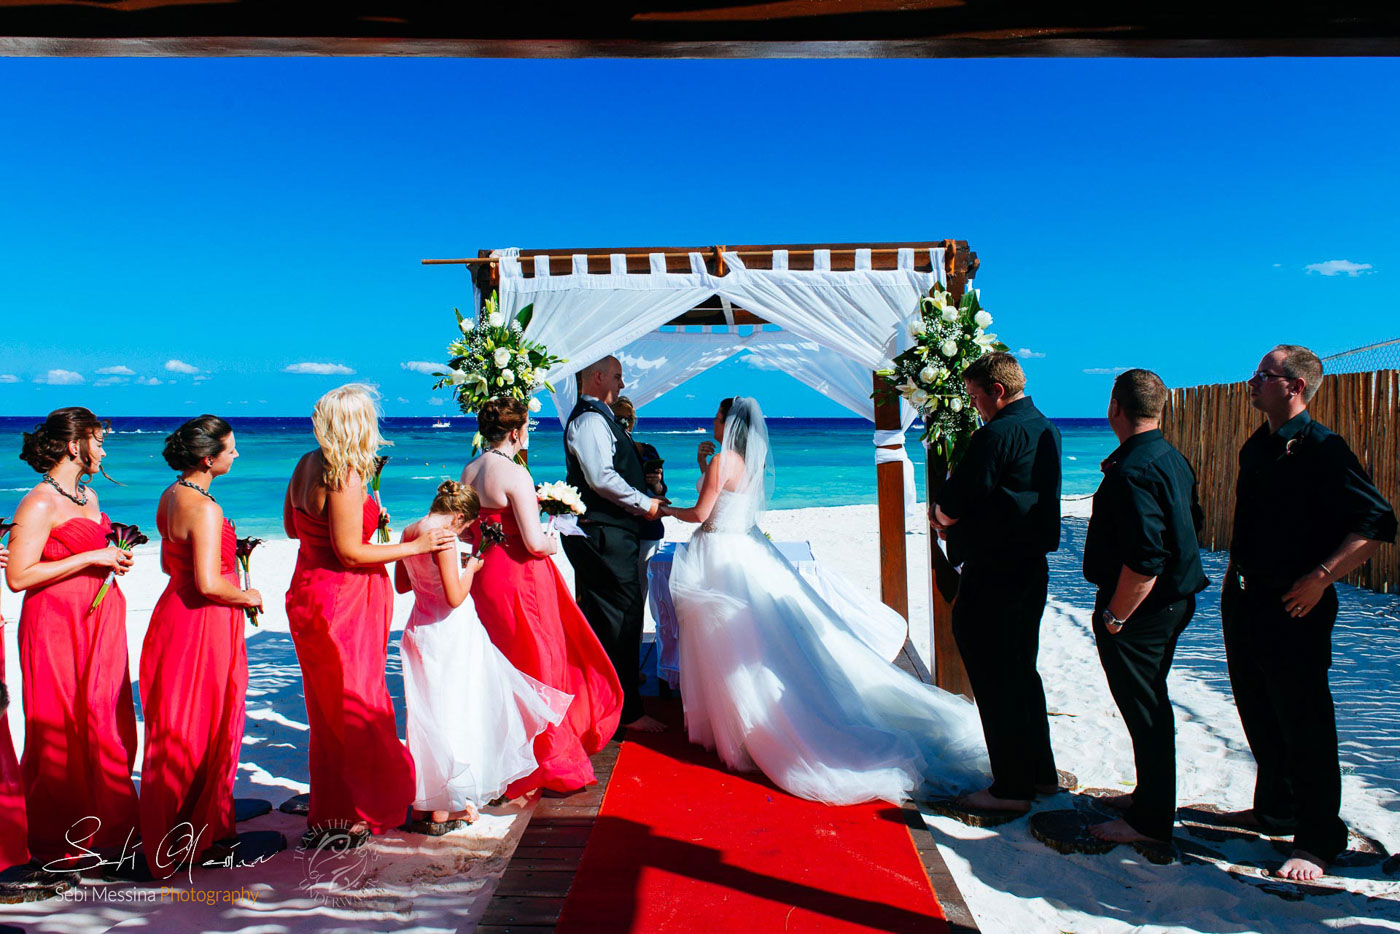 Grand Riviera Princess - Destination Wedding - Sebi Messina Photography